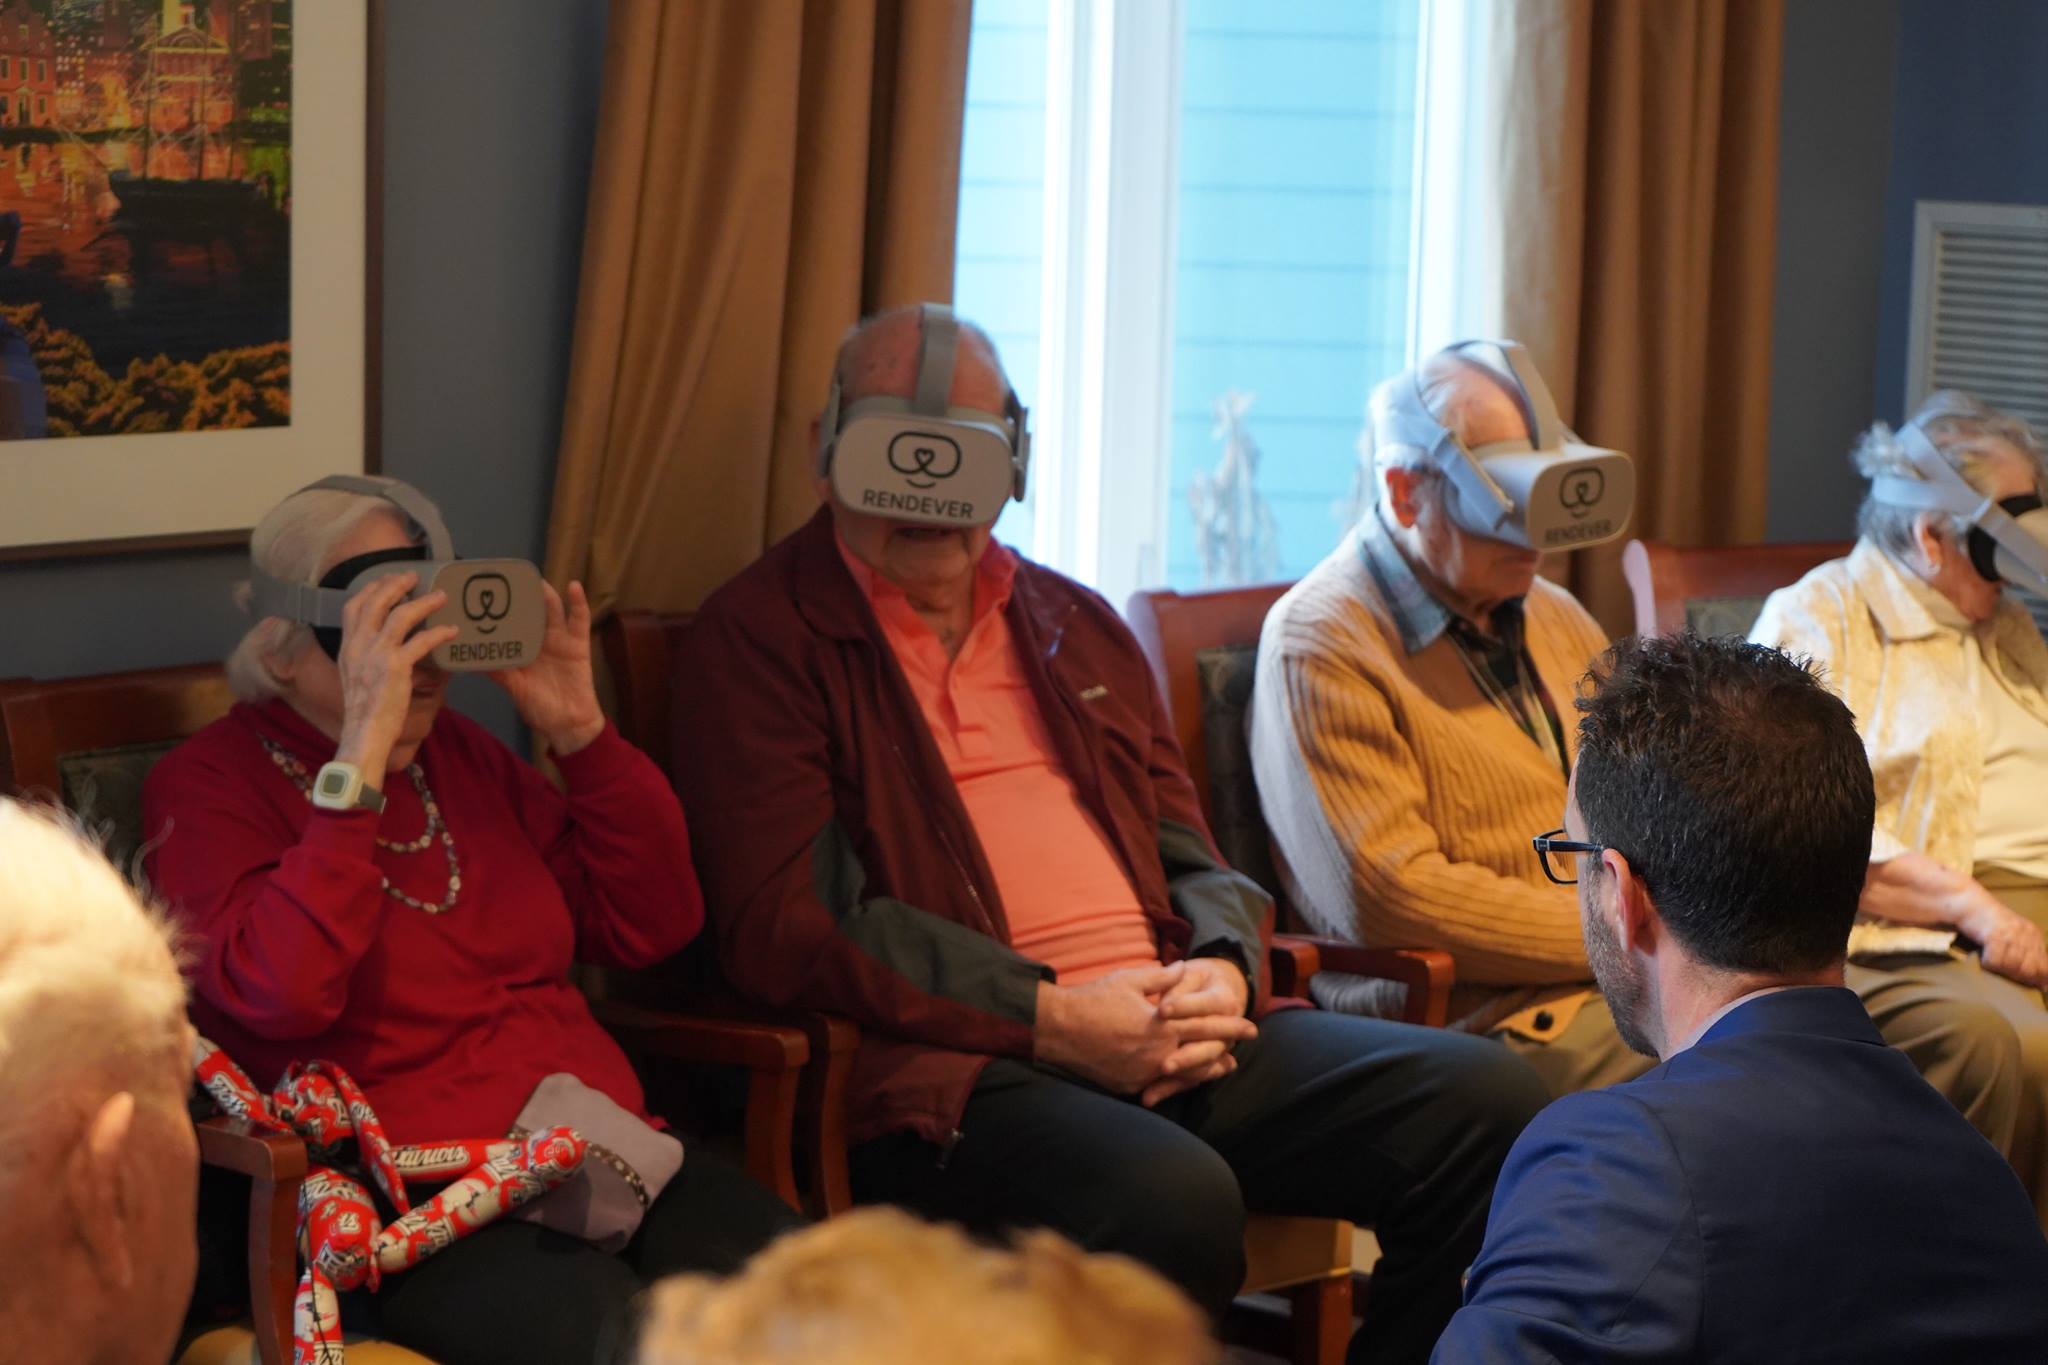 virtual reality for seniors